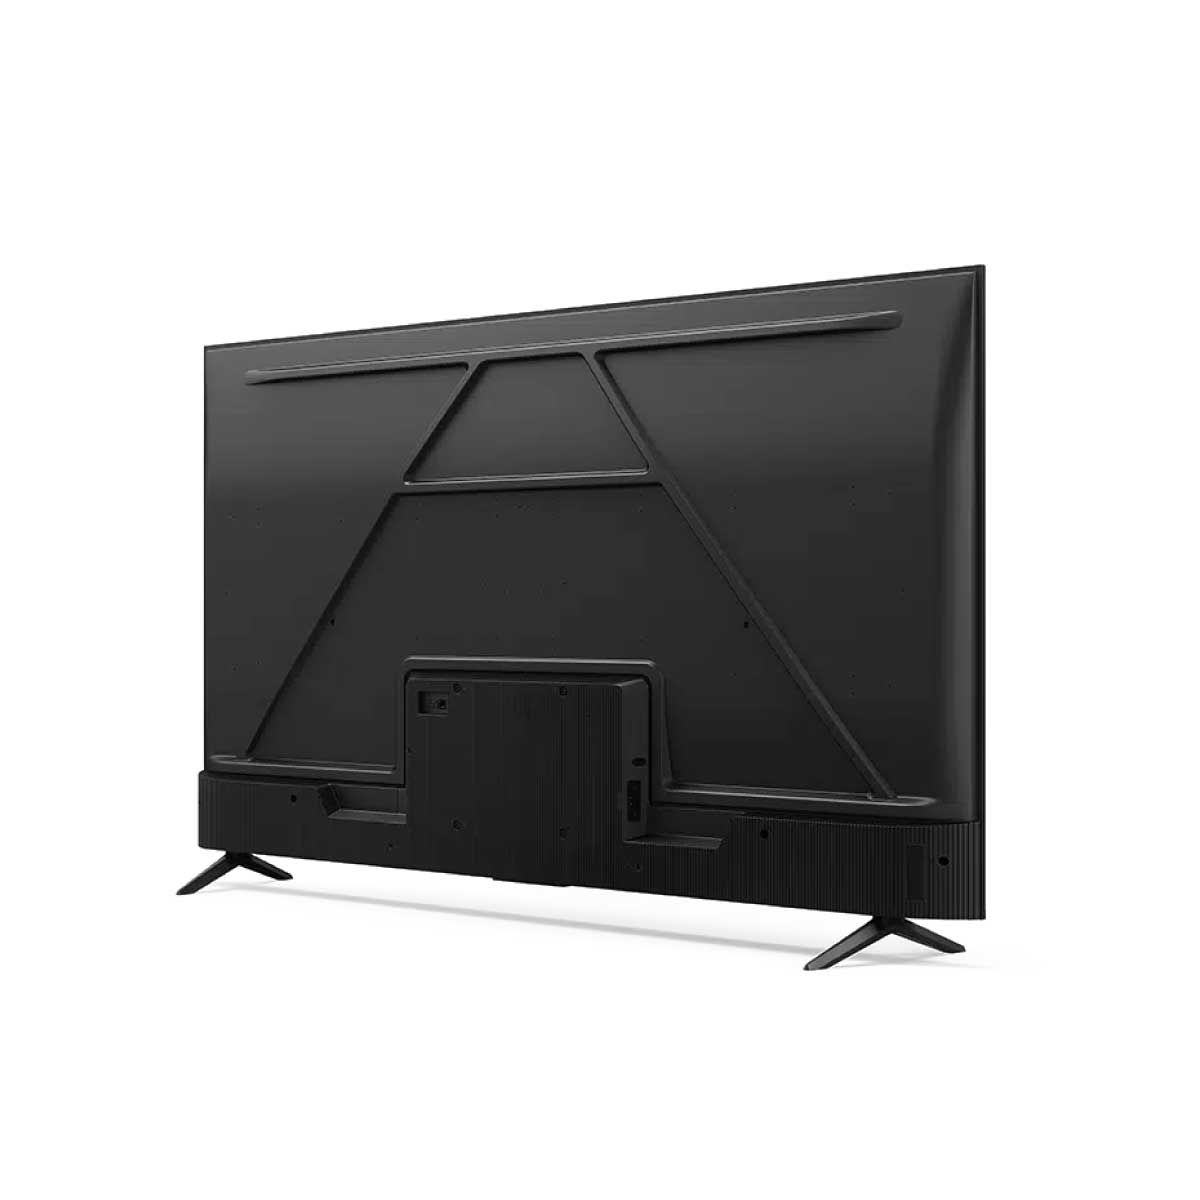 TCL LED Google TV 4K รุ่น 43P635 สมาร์ททีวี 43 นิ้ว Google TV